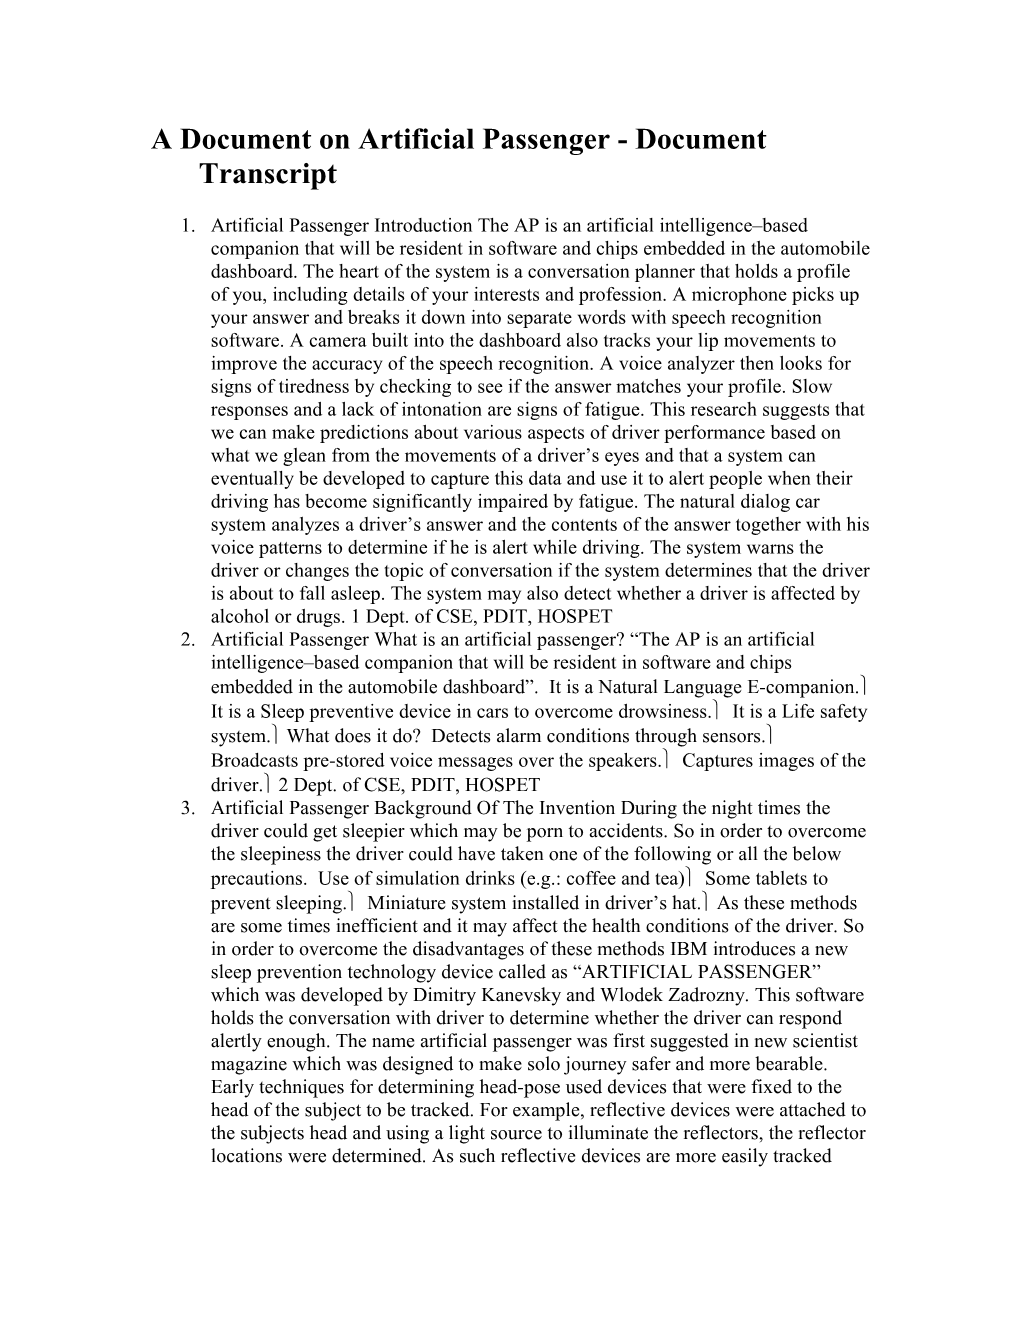 A Document on Artificial Passenger - Document Transcript